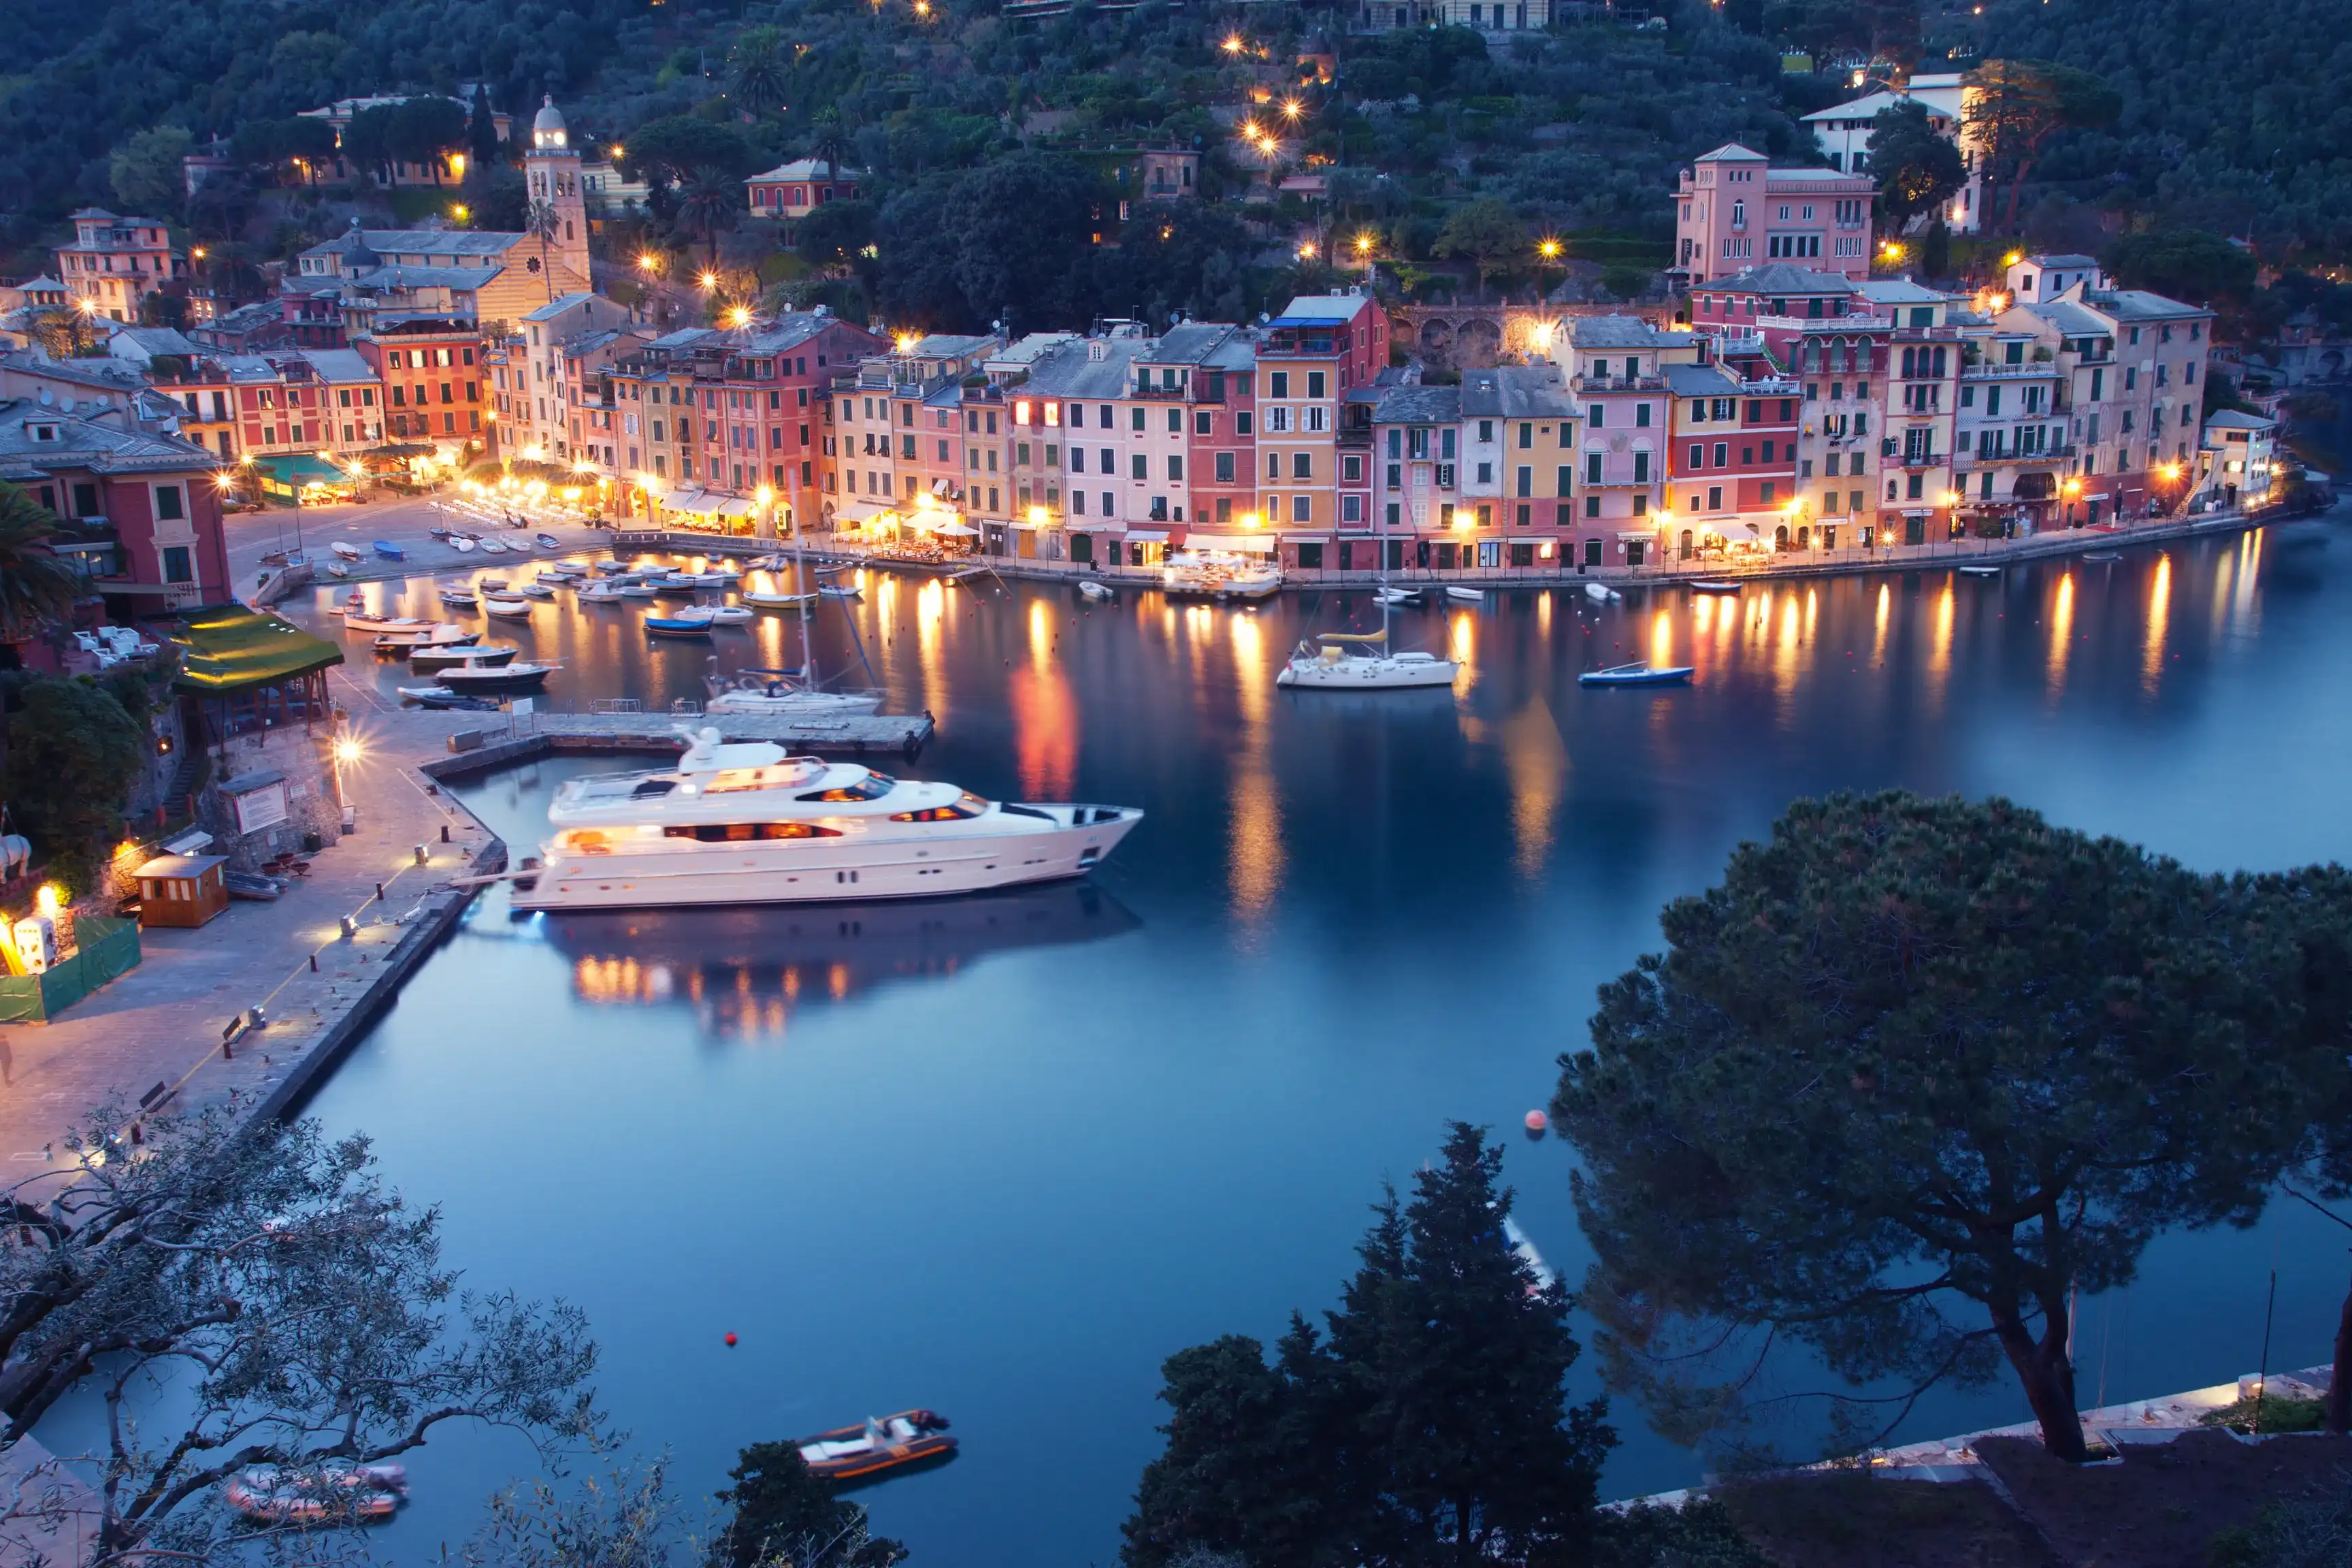 Liguria hotels. Best hotels in Liguria, Italy